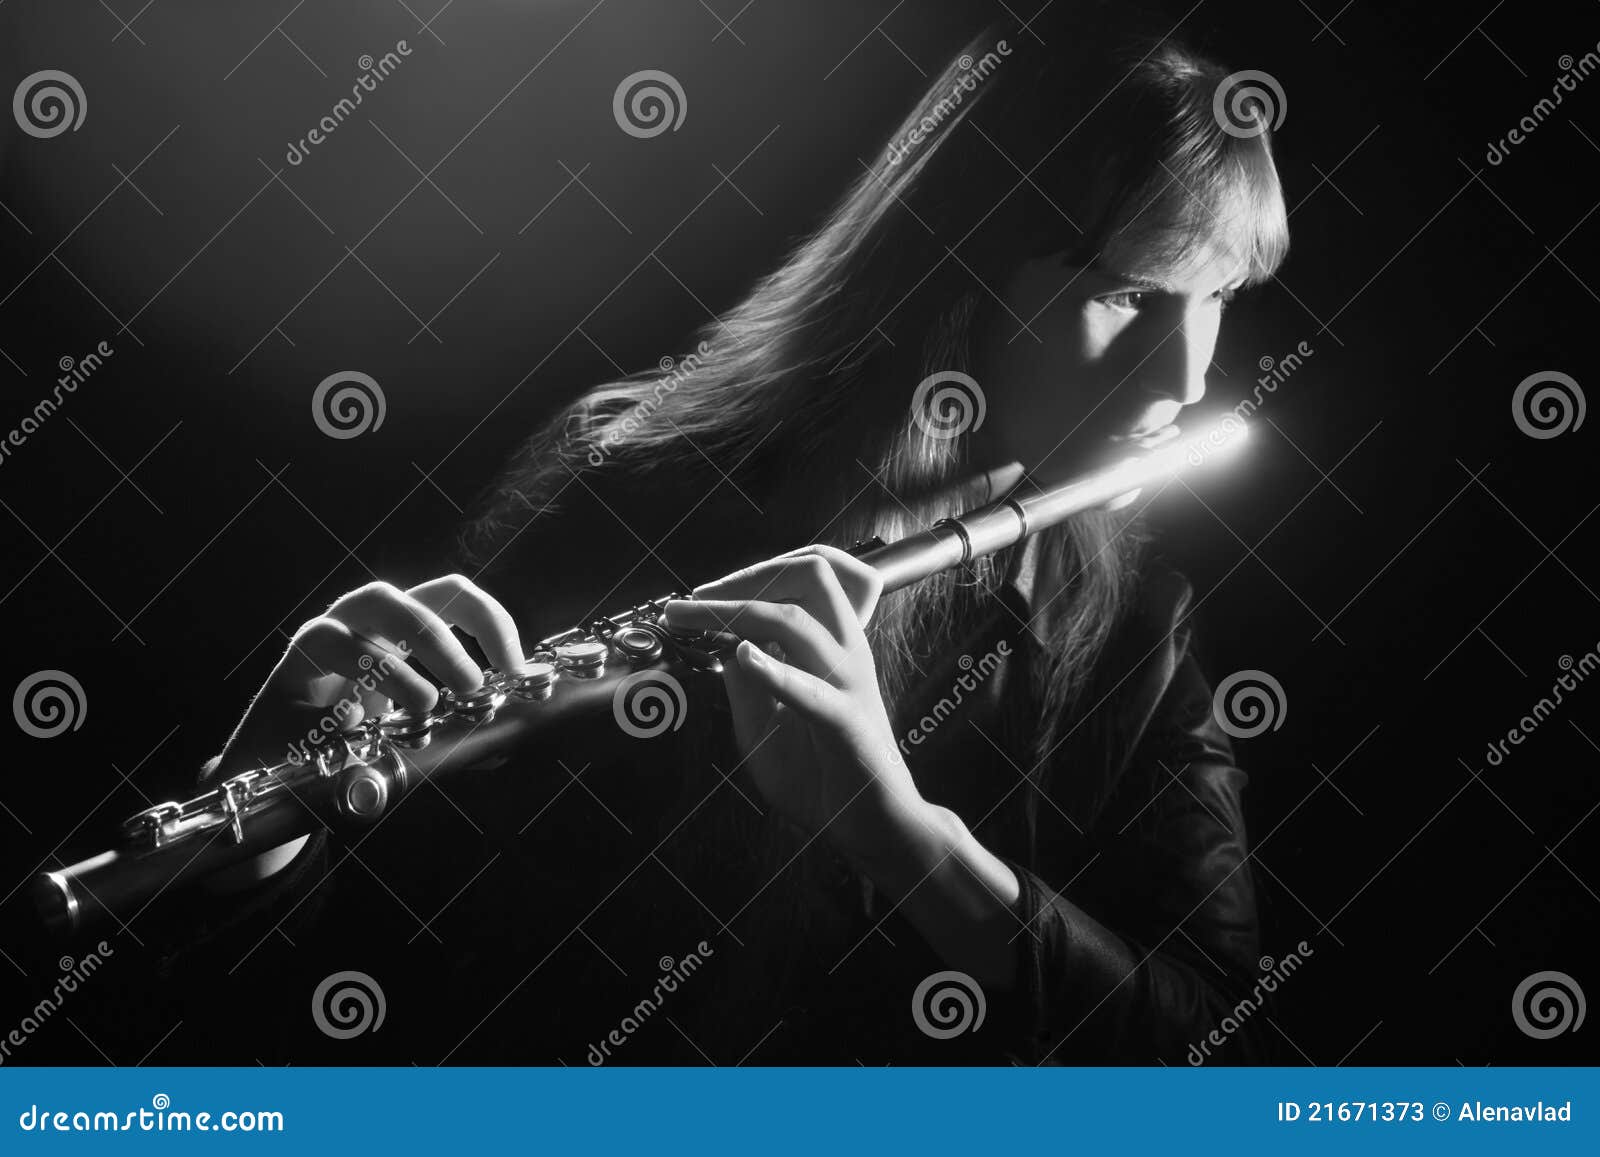 flute music flutist musician classical playing.